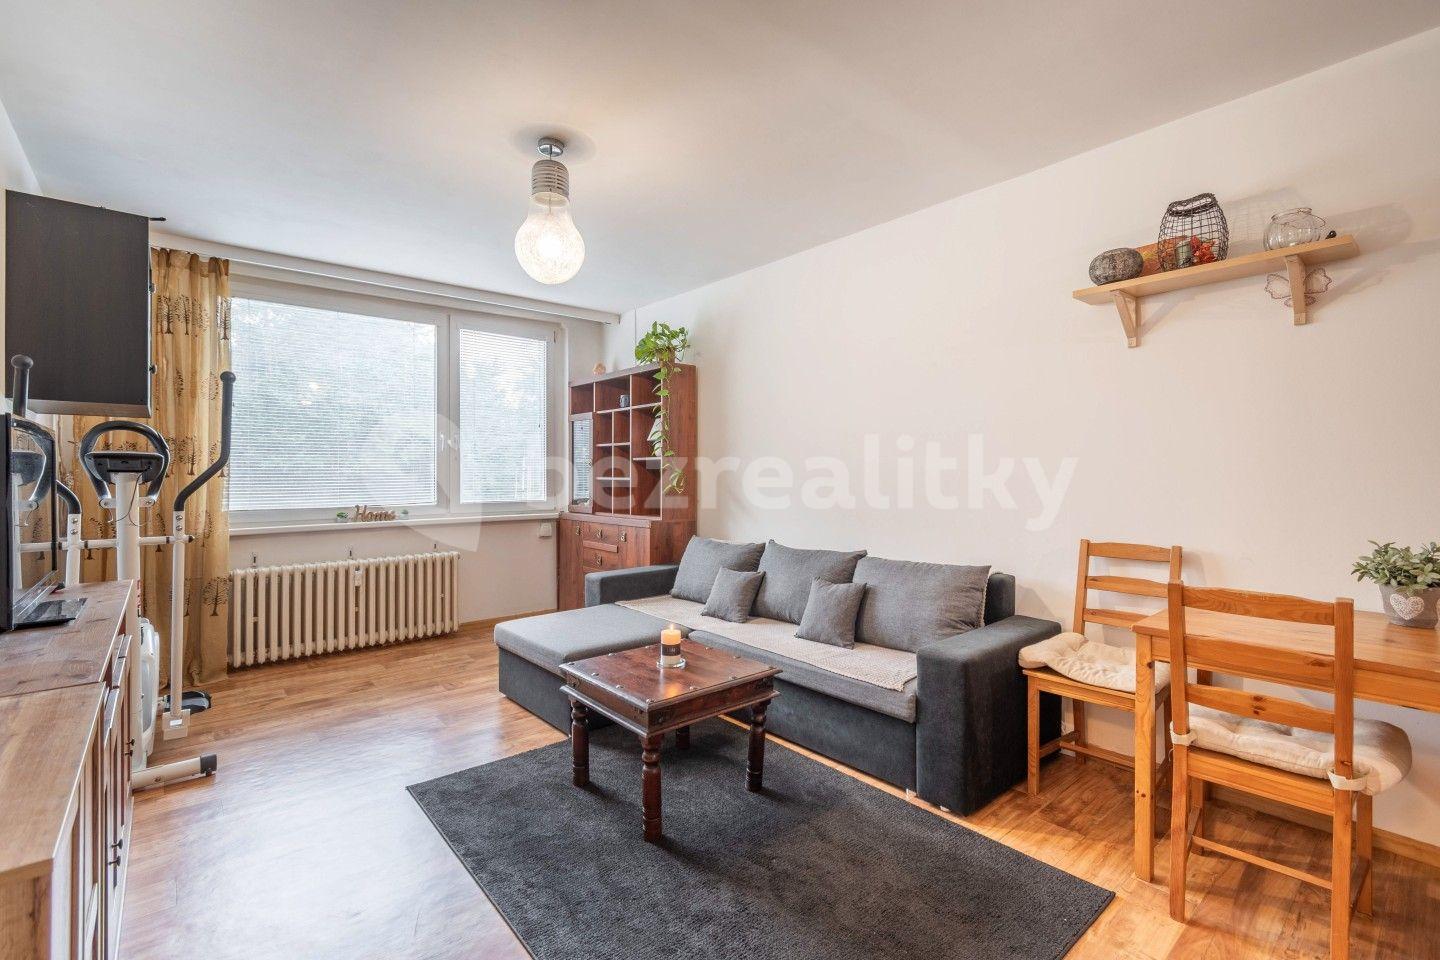 2 bedroom with open-plan kitchen flat for sale, 66 m², Petýrkova, Prague, Prague